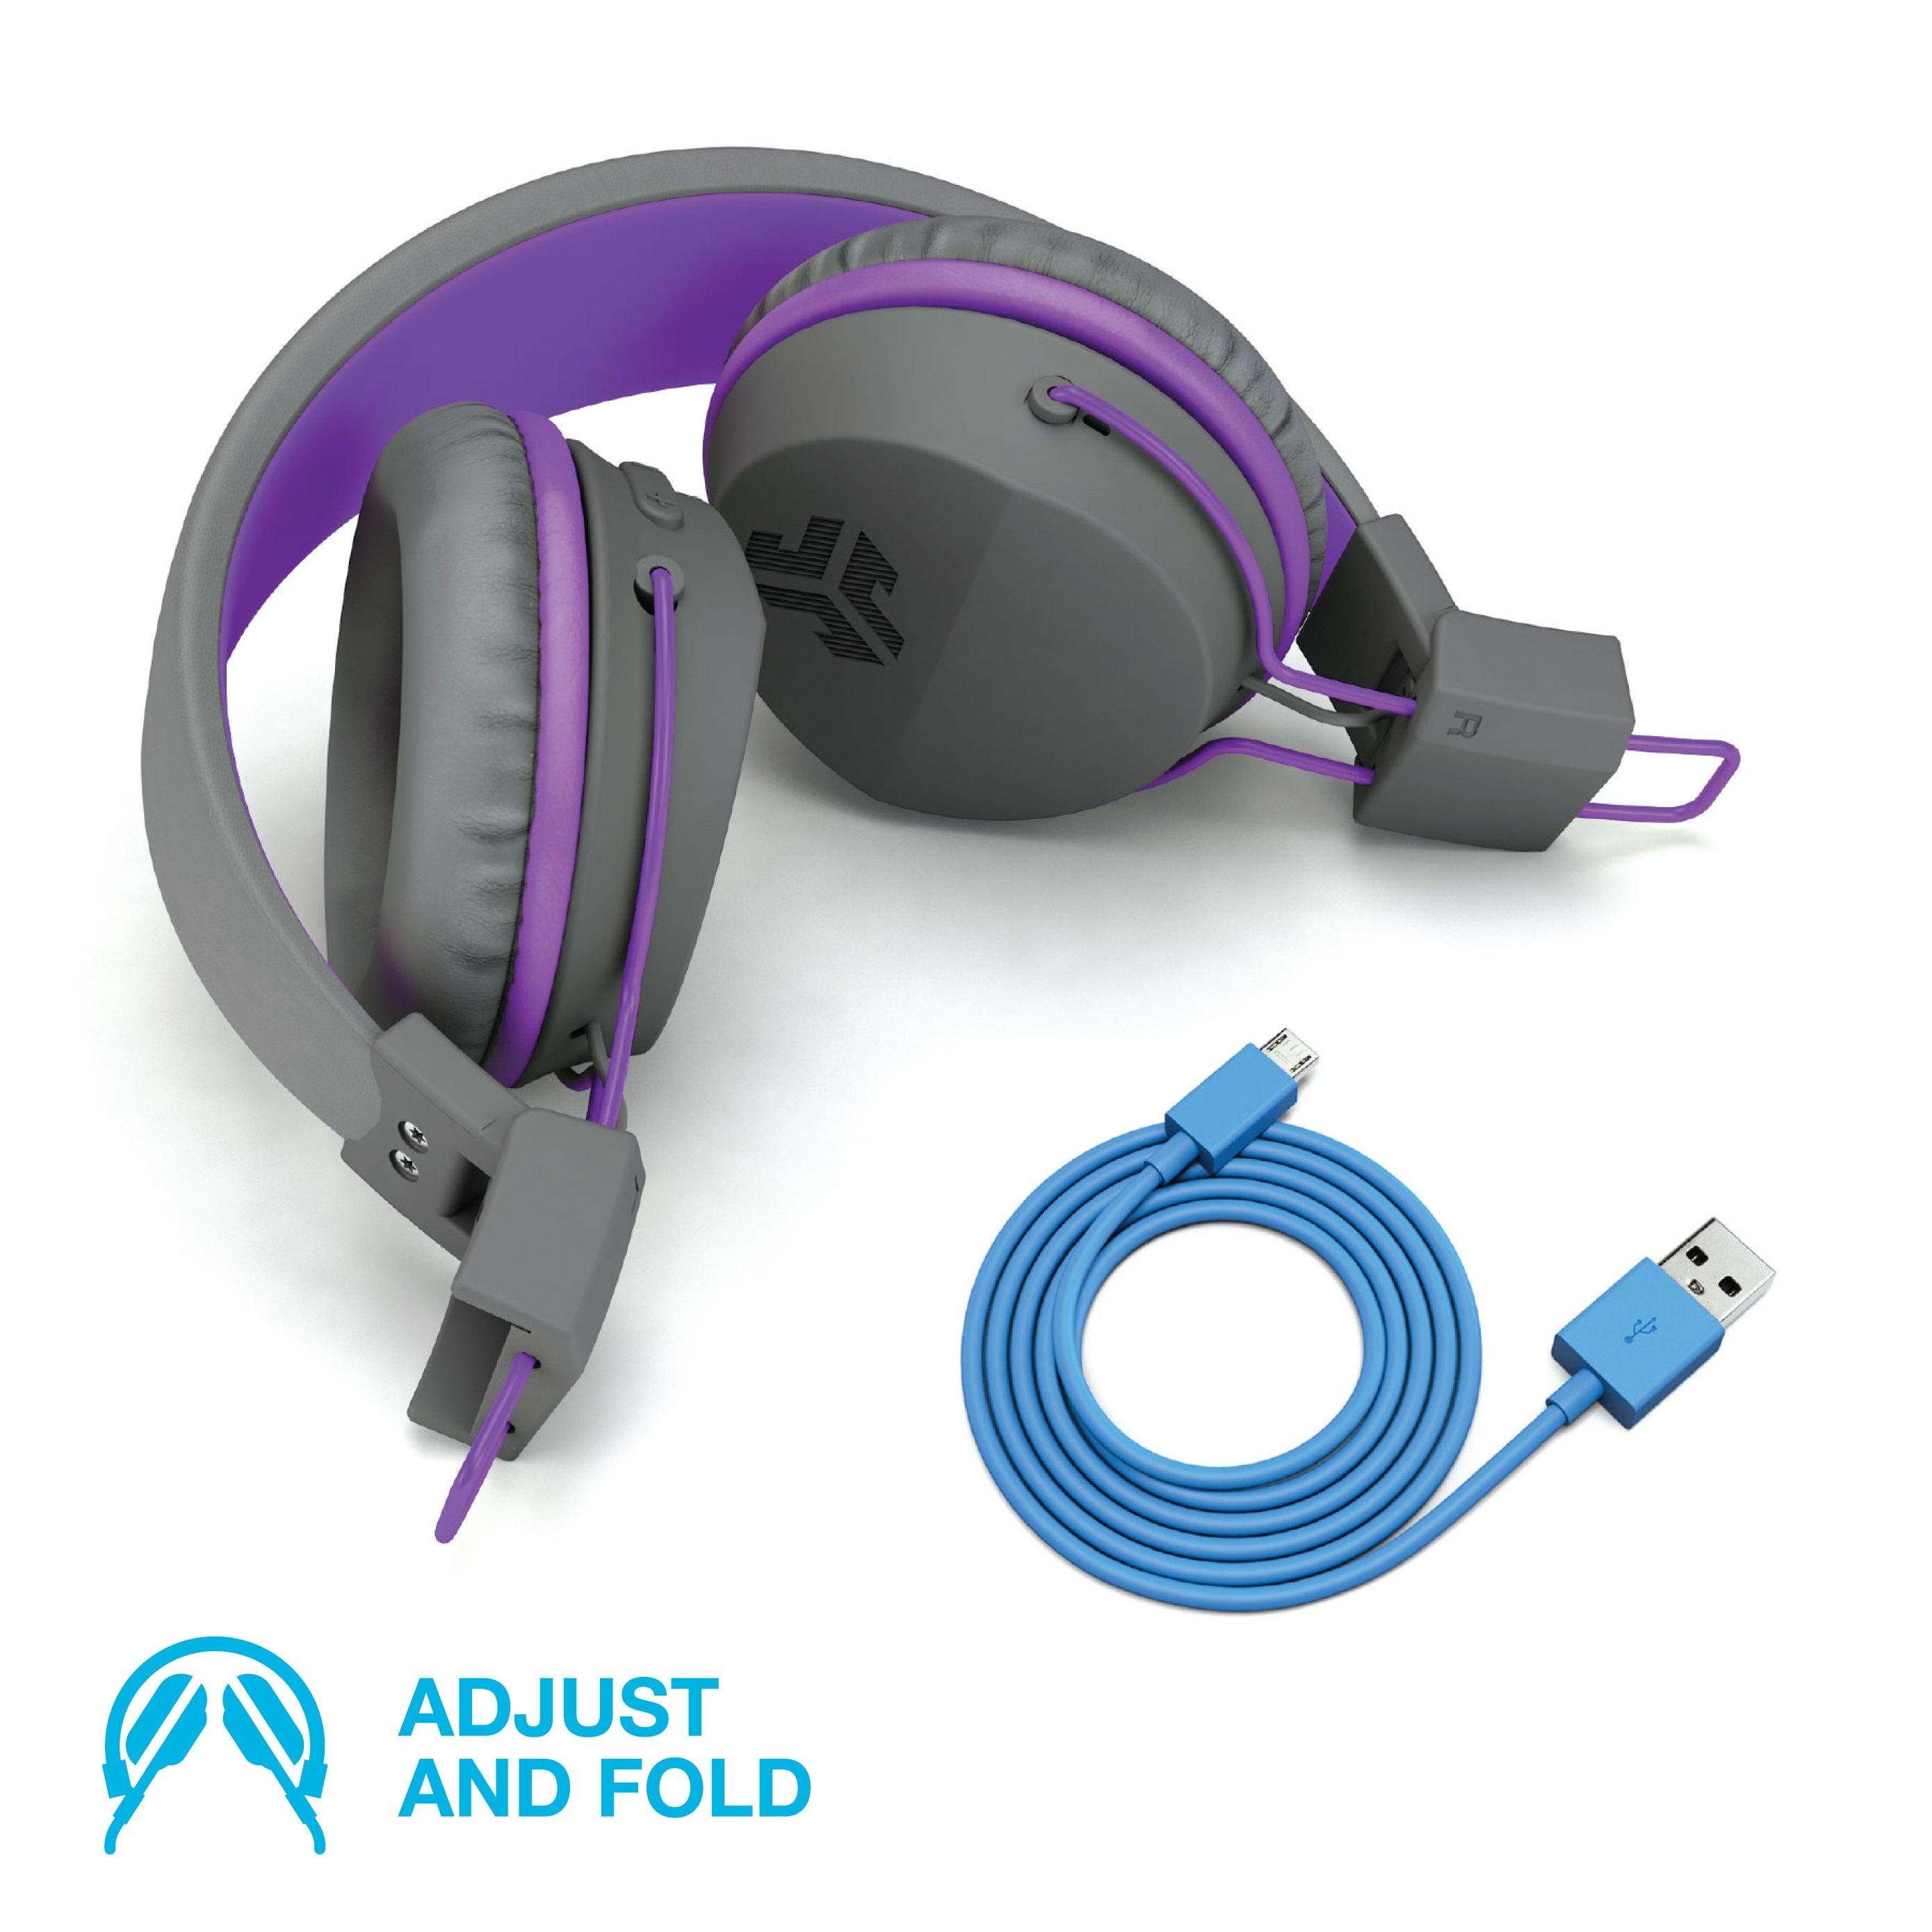 Jlab  JLab IEUHBSTUDIORGRYPRPL4 Kopfhörer & Headset Kabellos Kopfband Musik Micro USB Bluetooth Blau, Graphit, Violett 